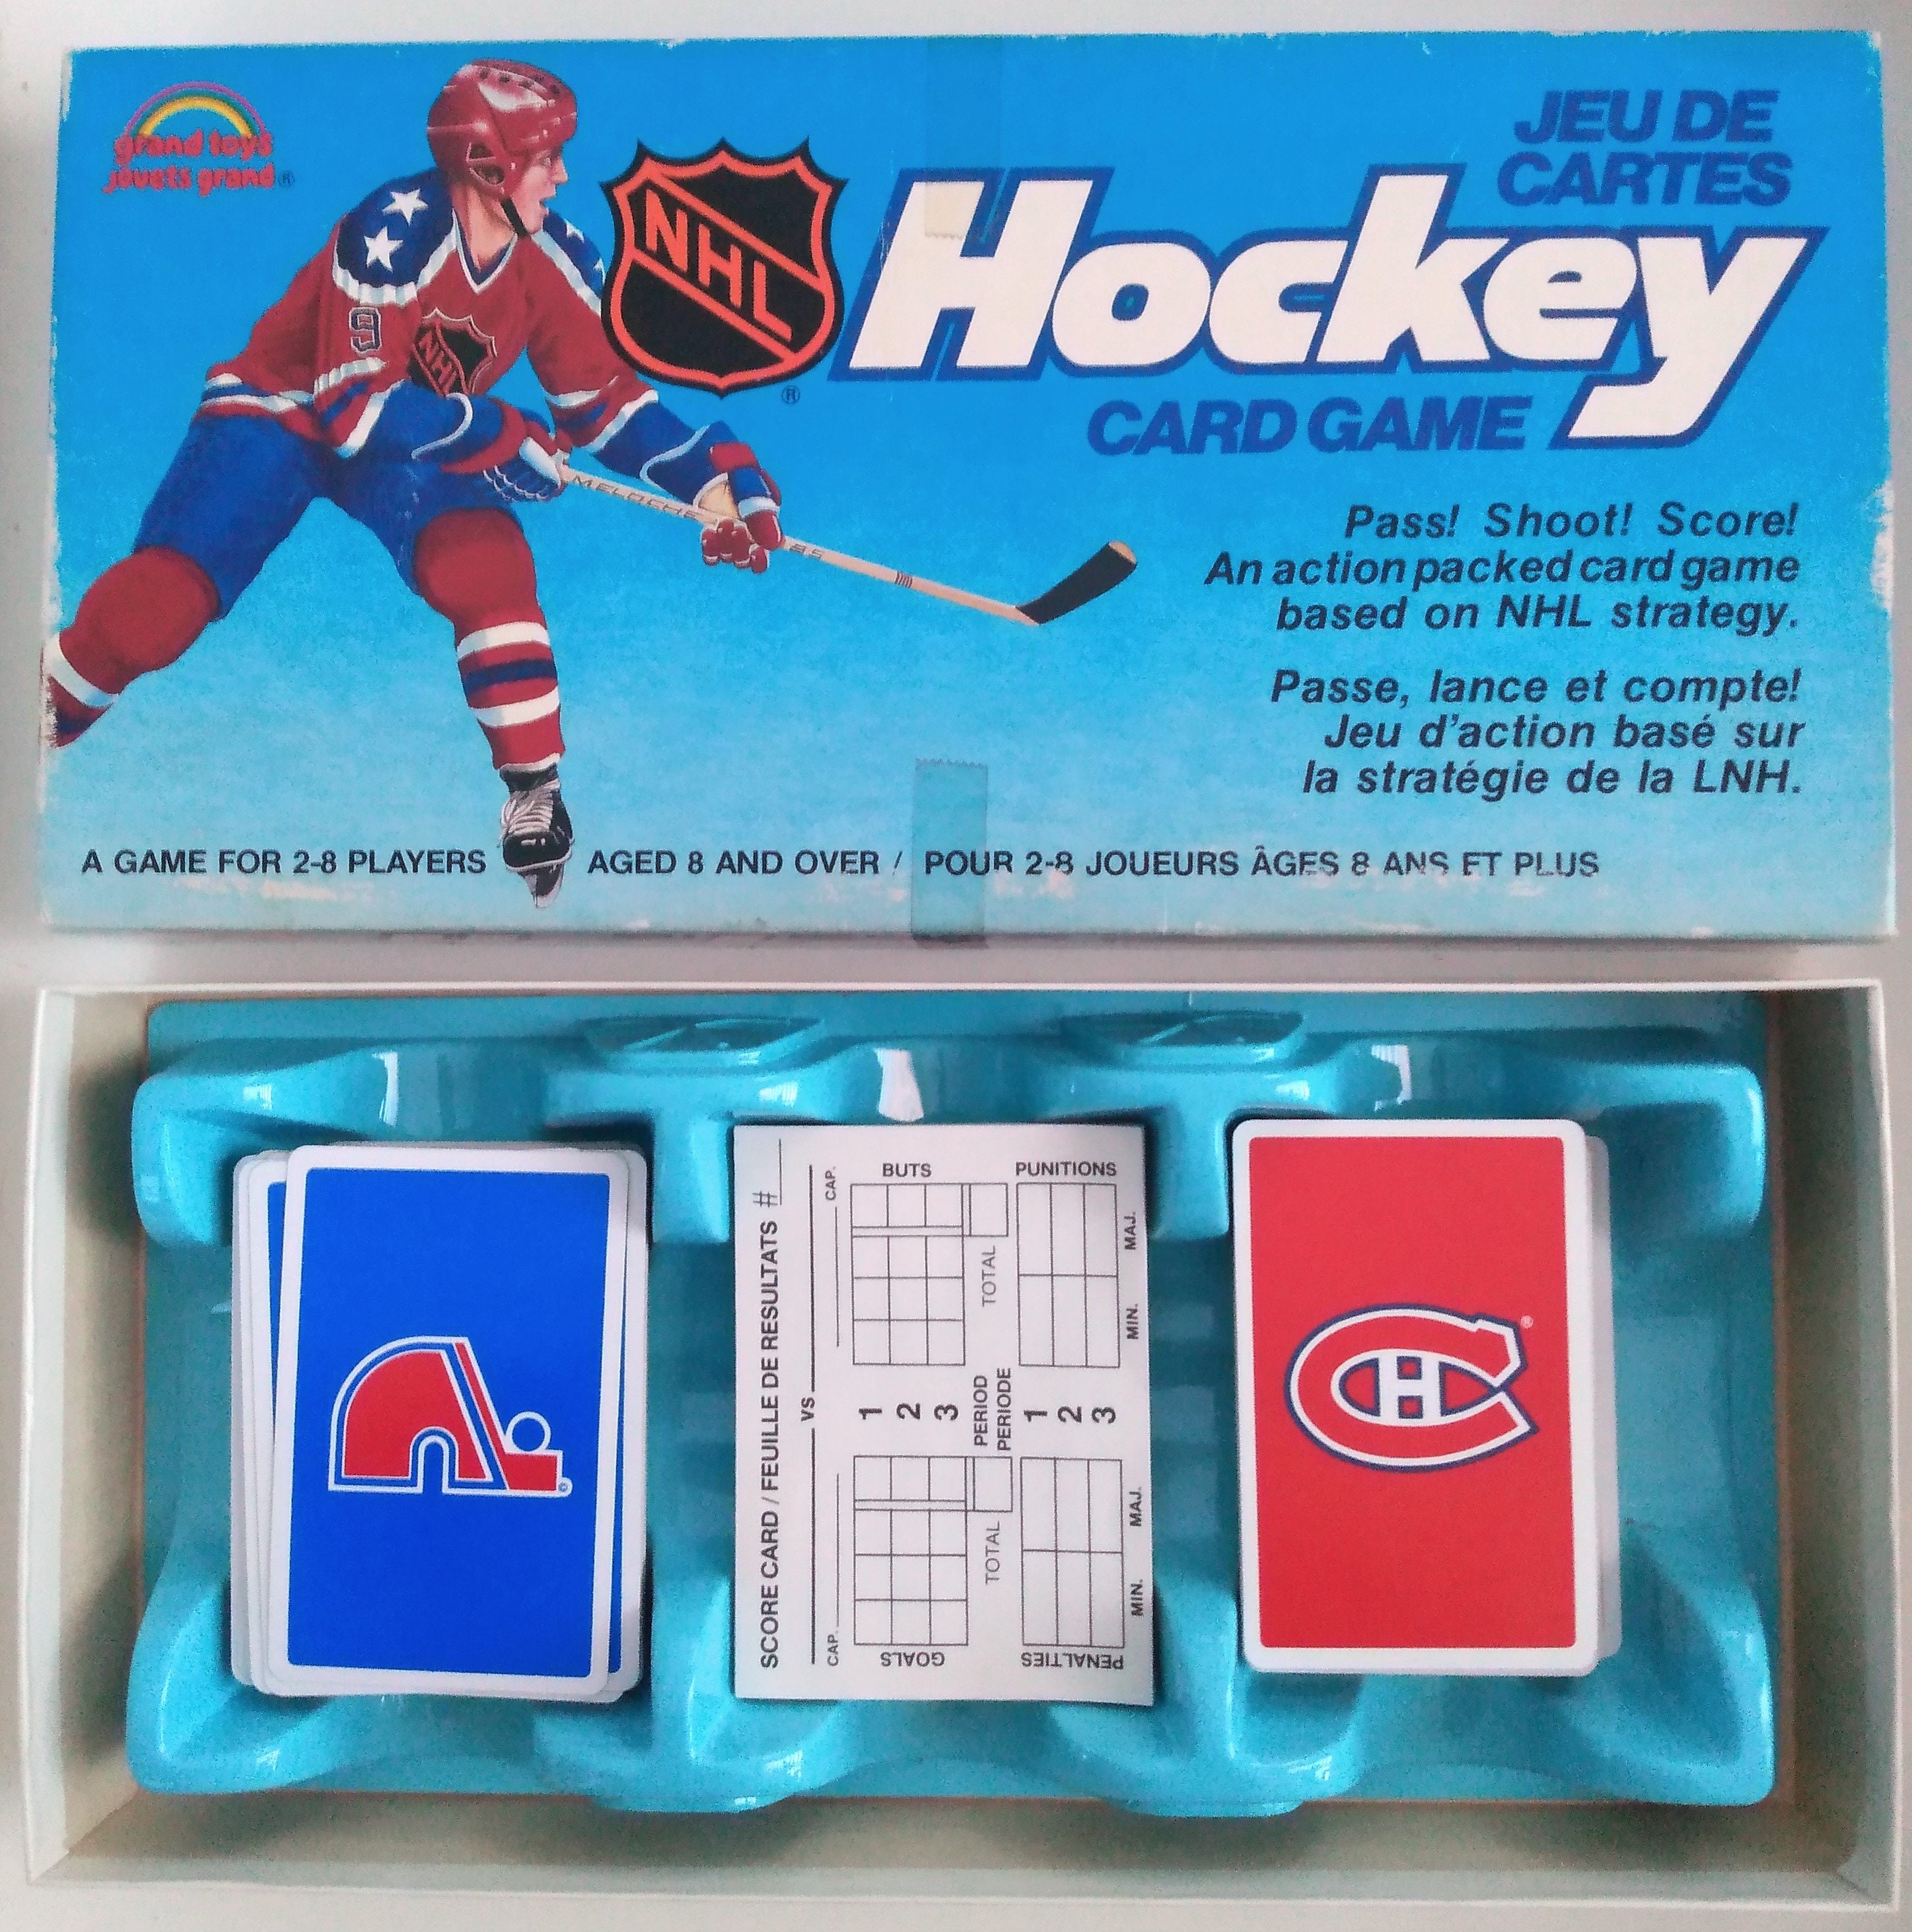 Men's Nhl Toronto Maple Leafs Lapel Pin, Blue - Shopping.com